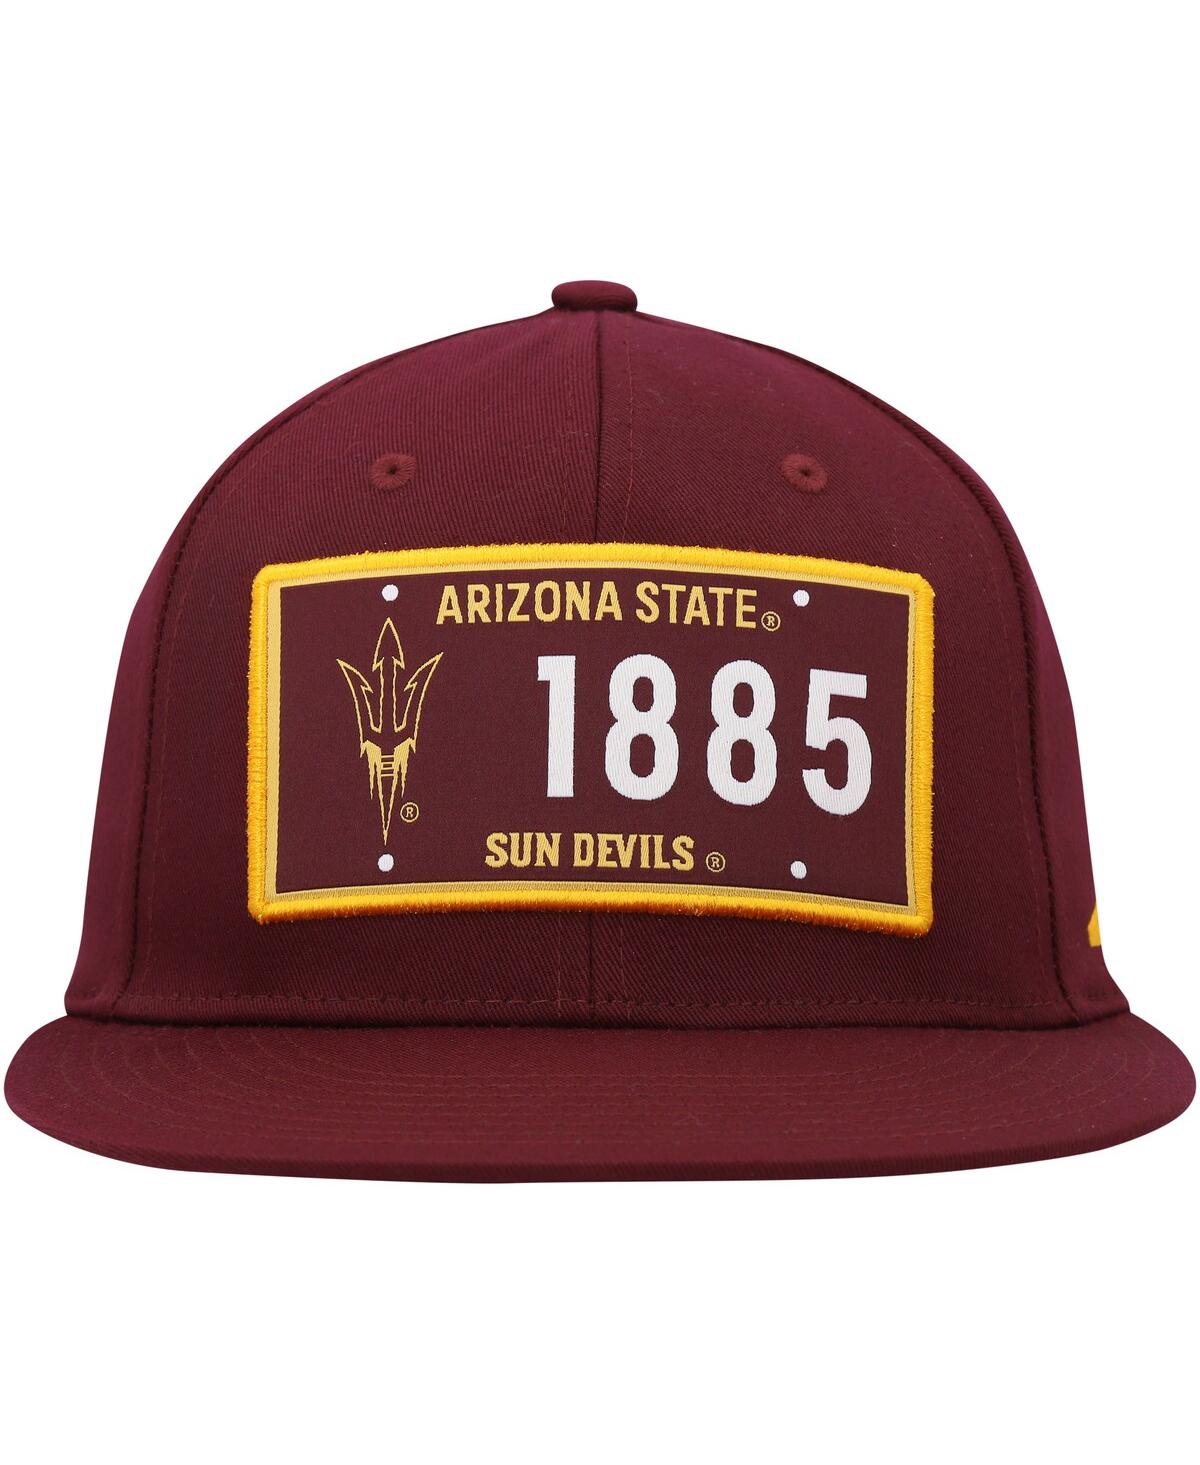 Shop Adidas Originals Men's Adidas Maroon Arizona State Sun Devils Established Snapback Hat